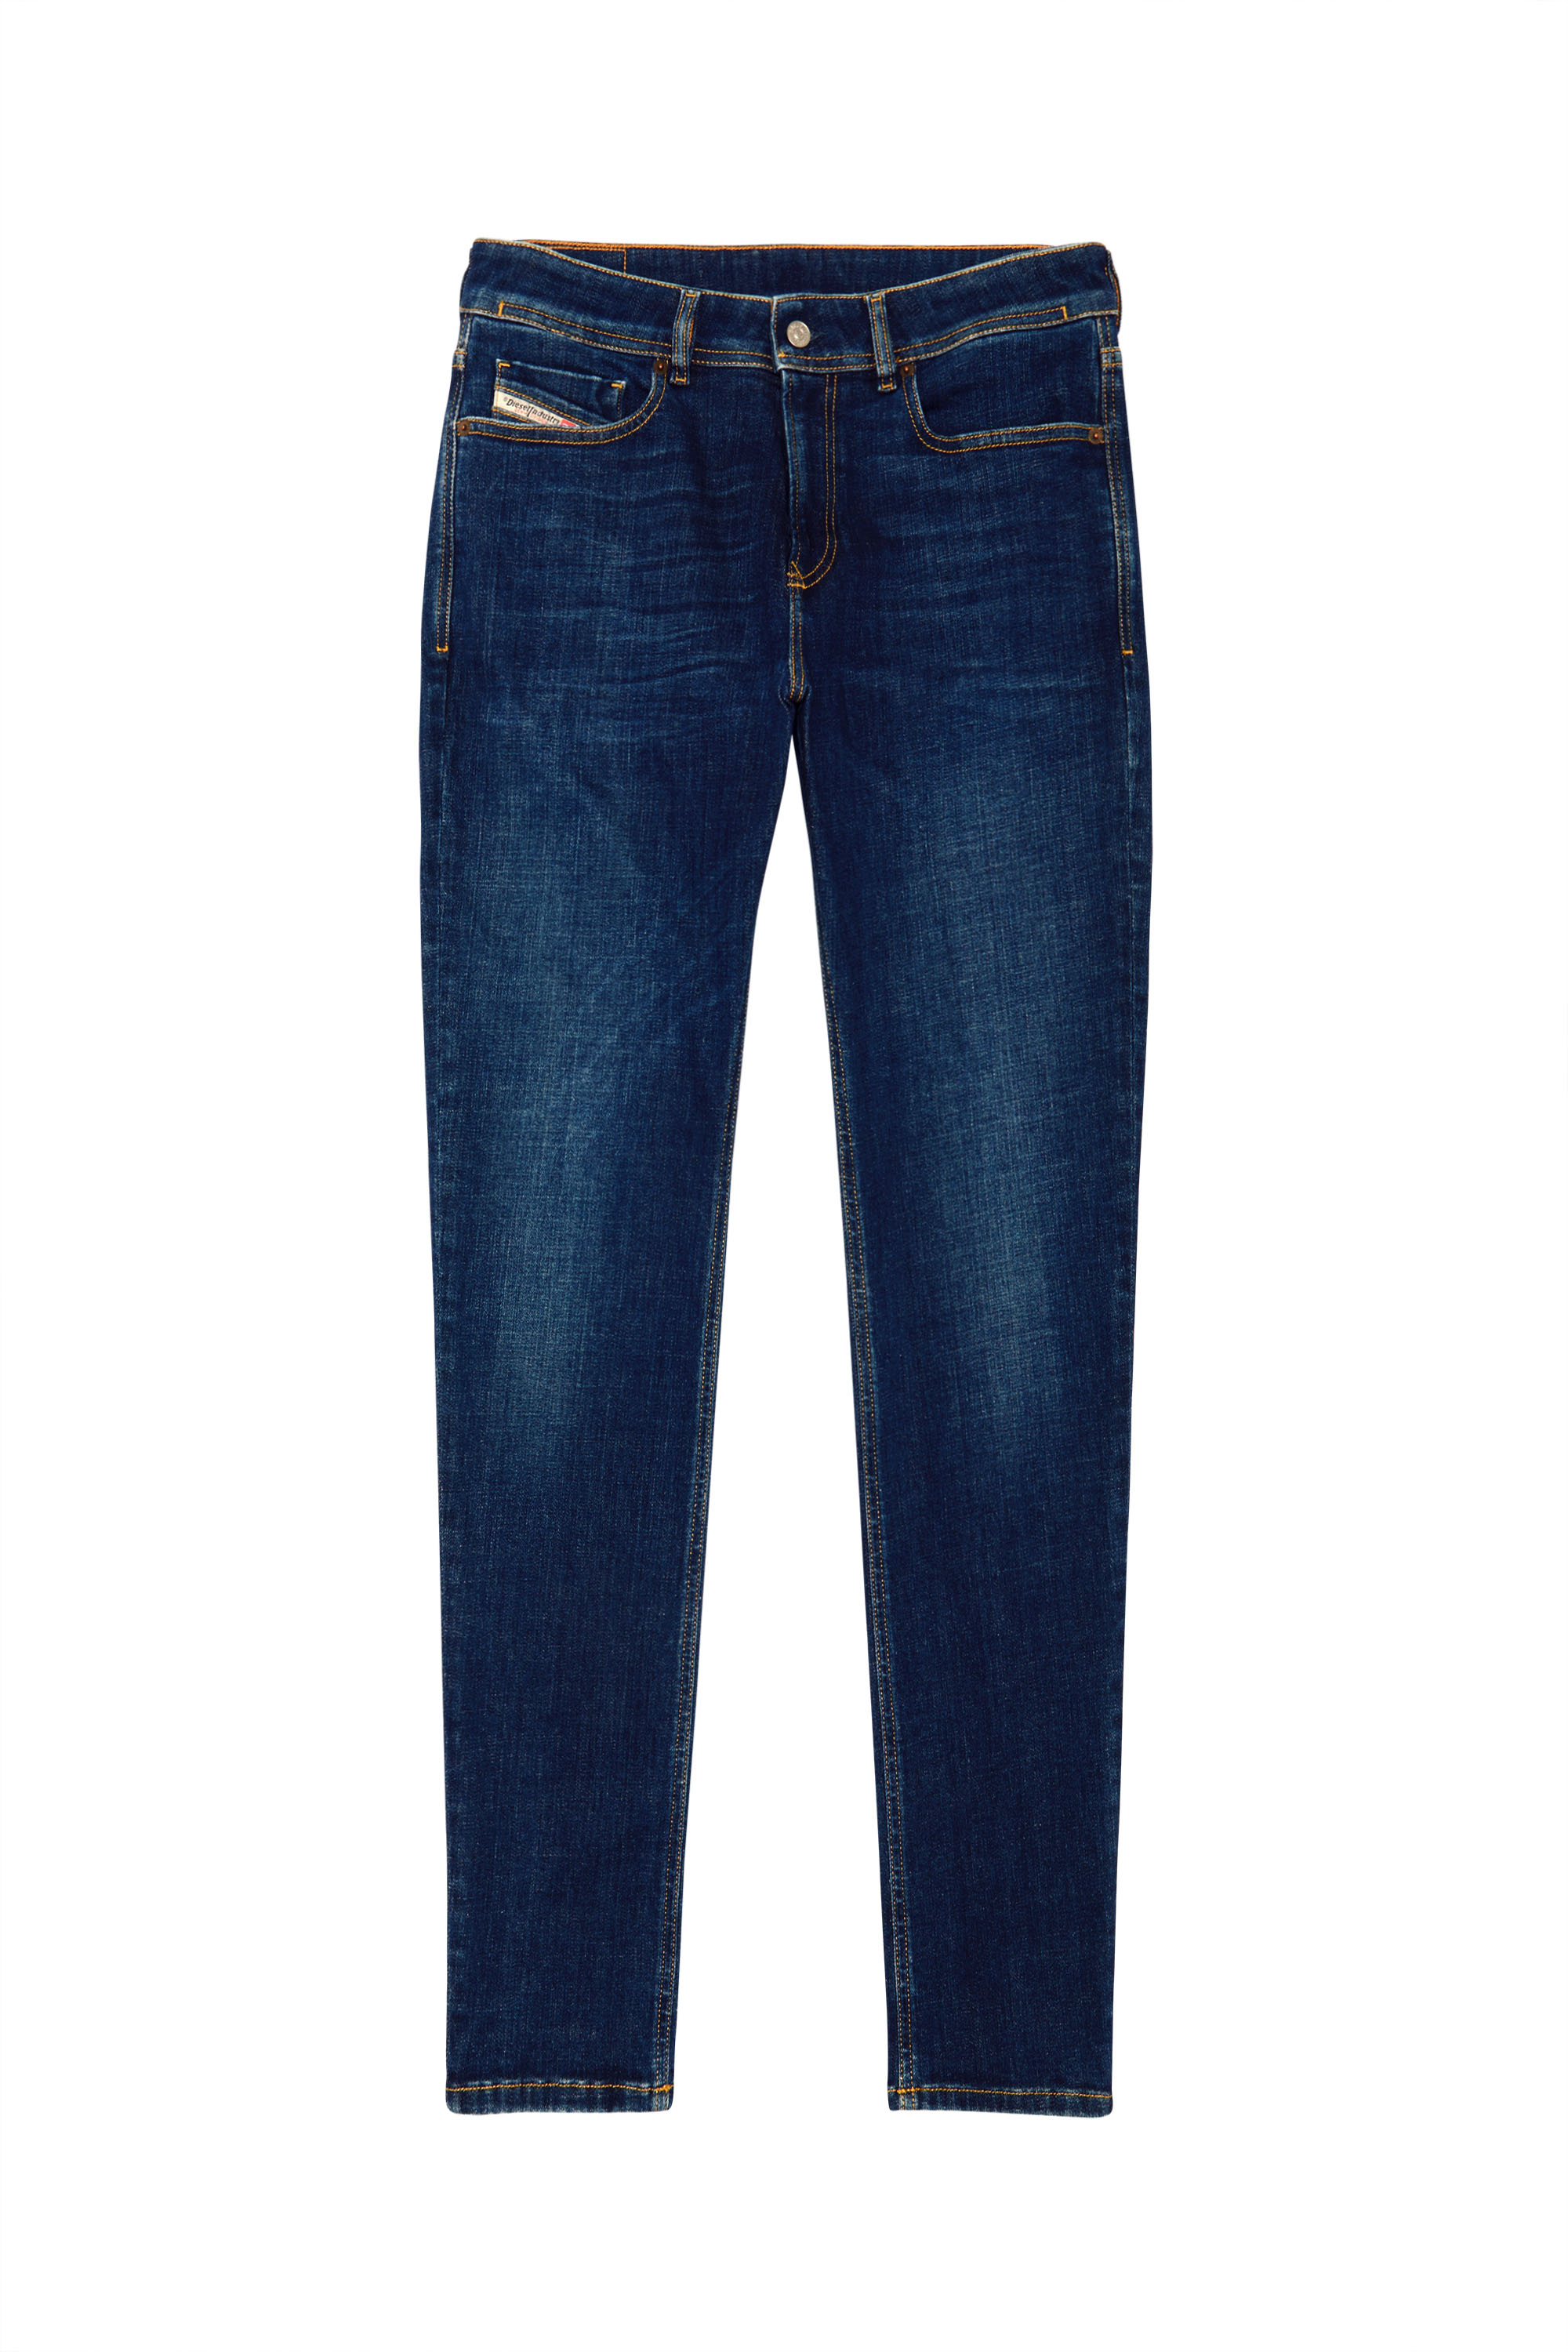 1979 Sleenker 09B98 Skinny Jeans, Dark Blue - Jeans